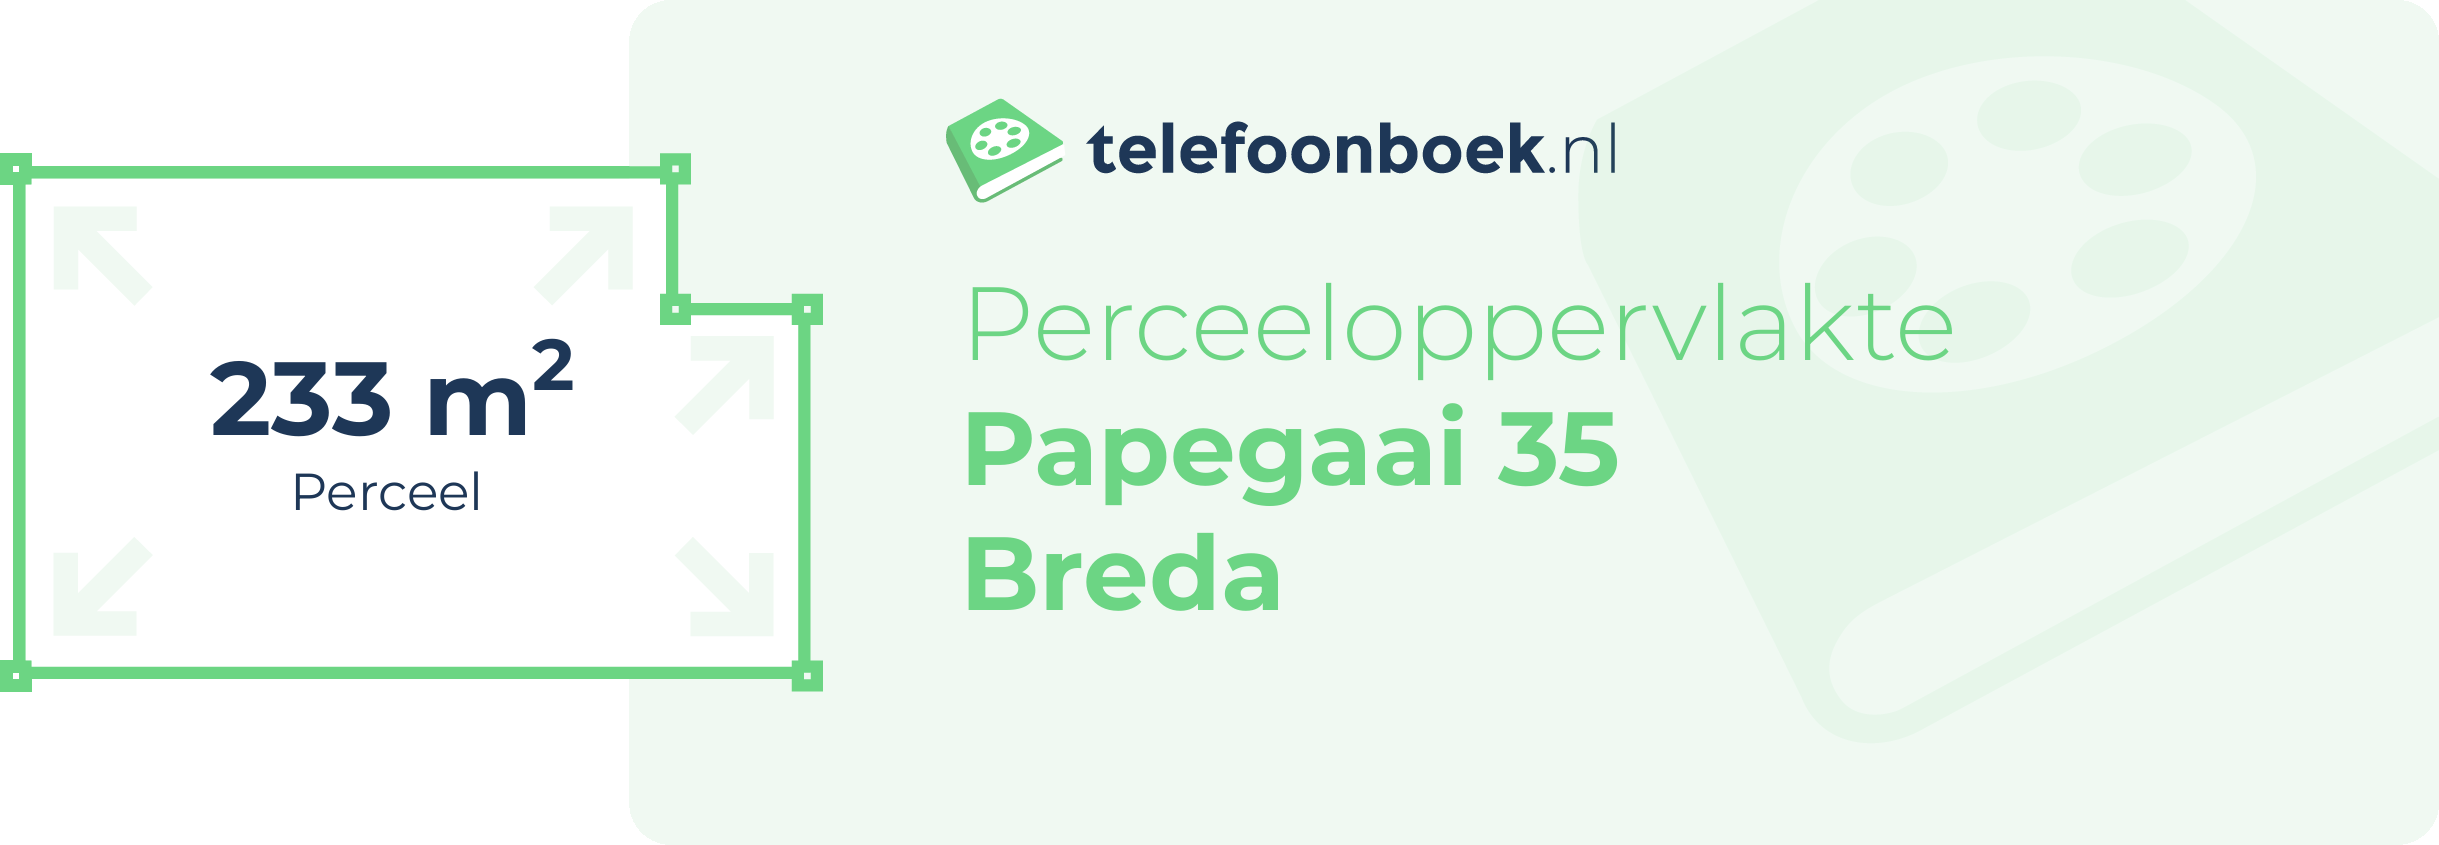 Perceeloppervlakte Papegaai 35 Breda